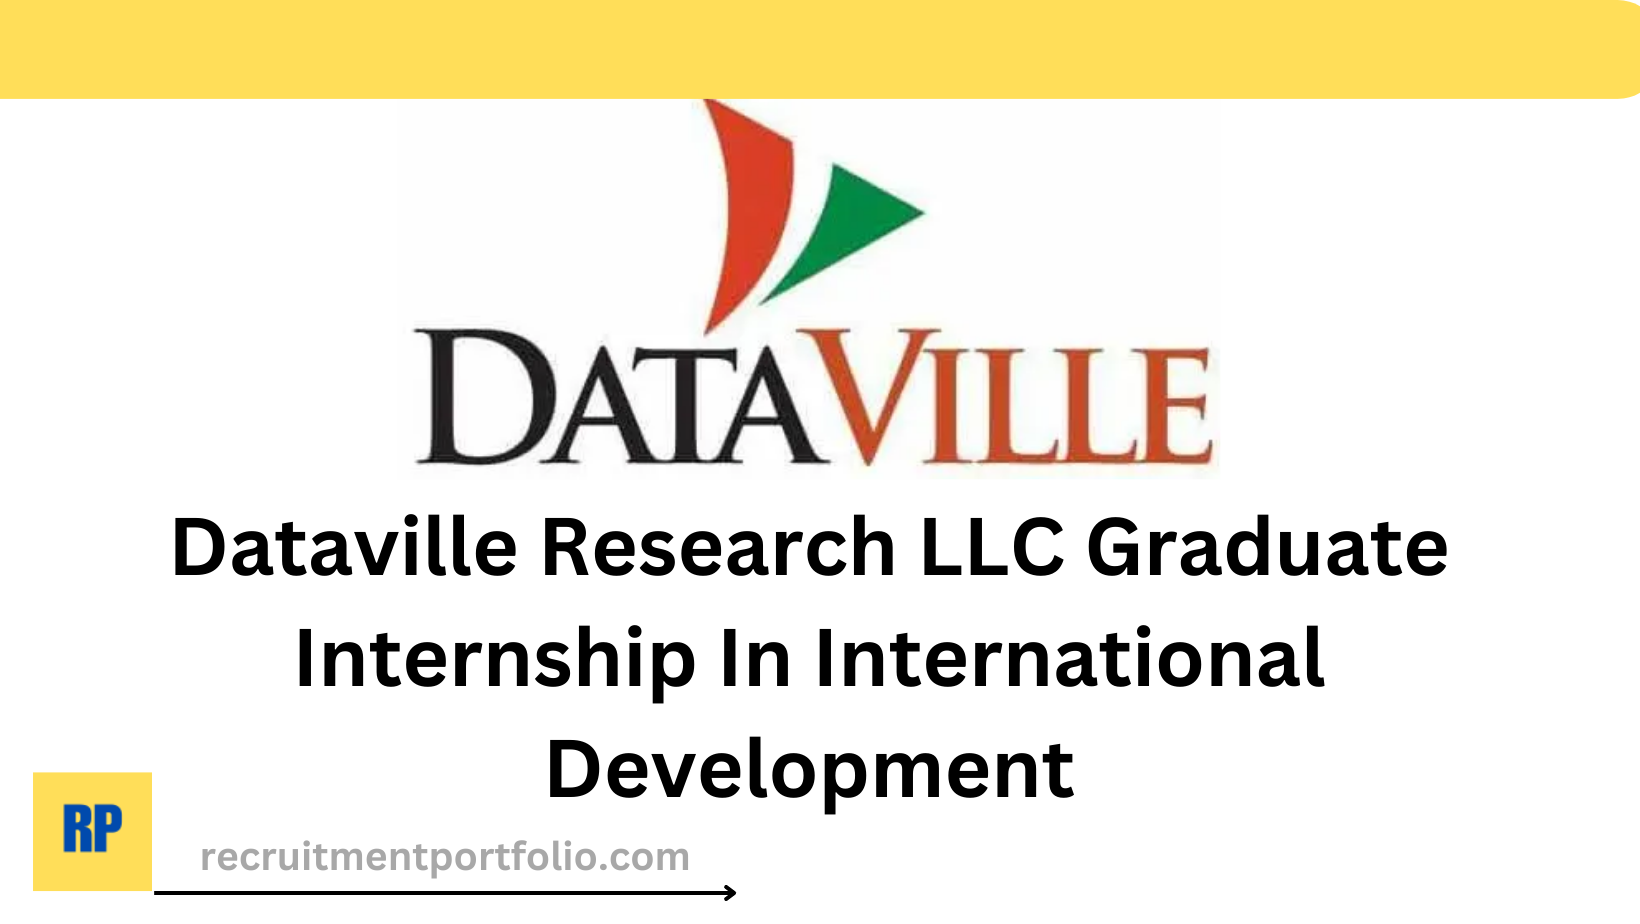 Dataville Research LLC Graduate Internship In International Development